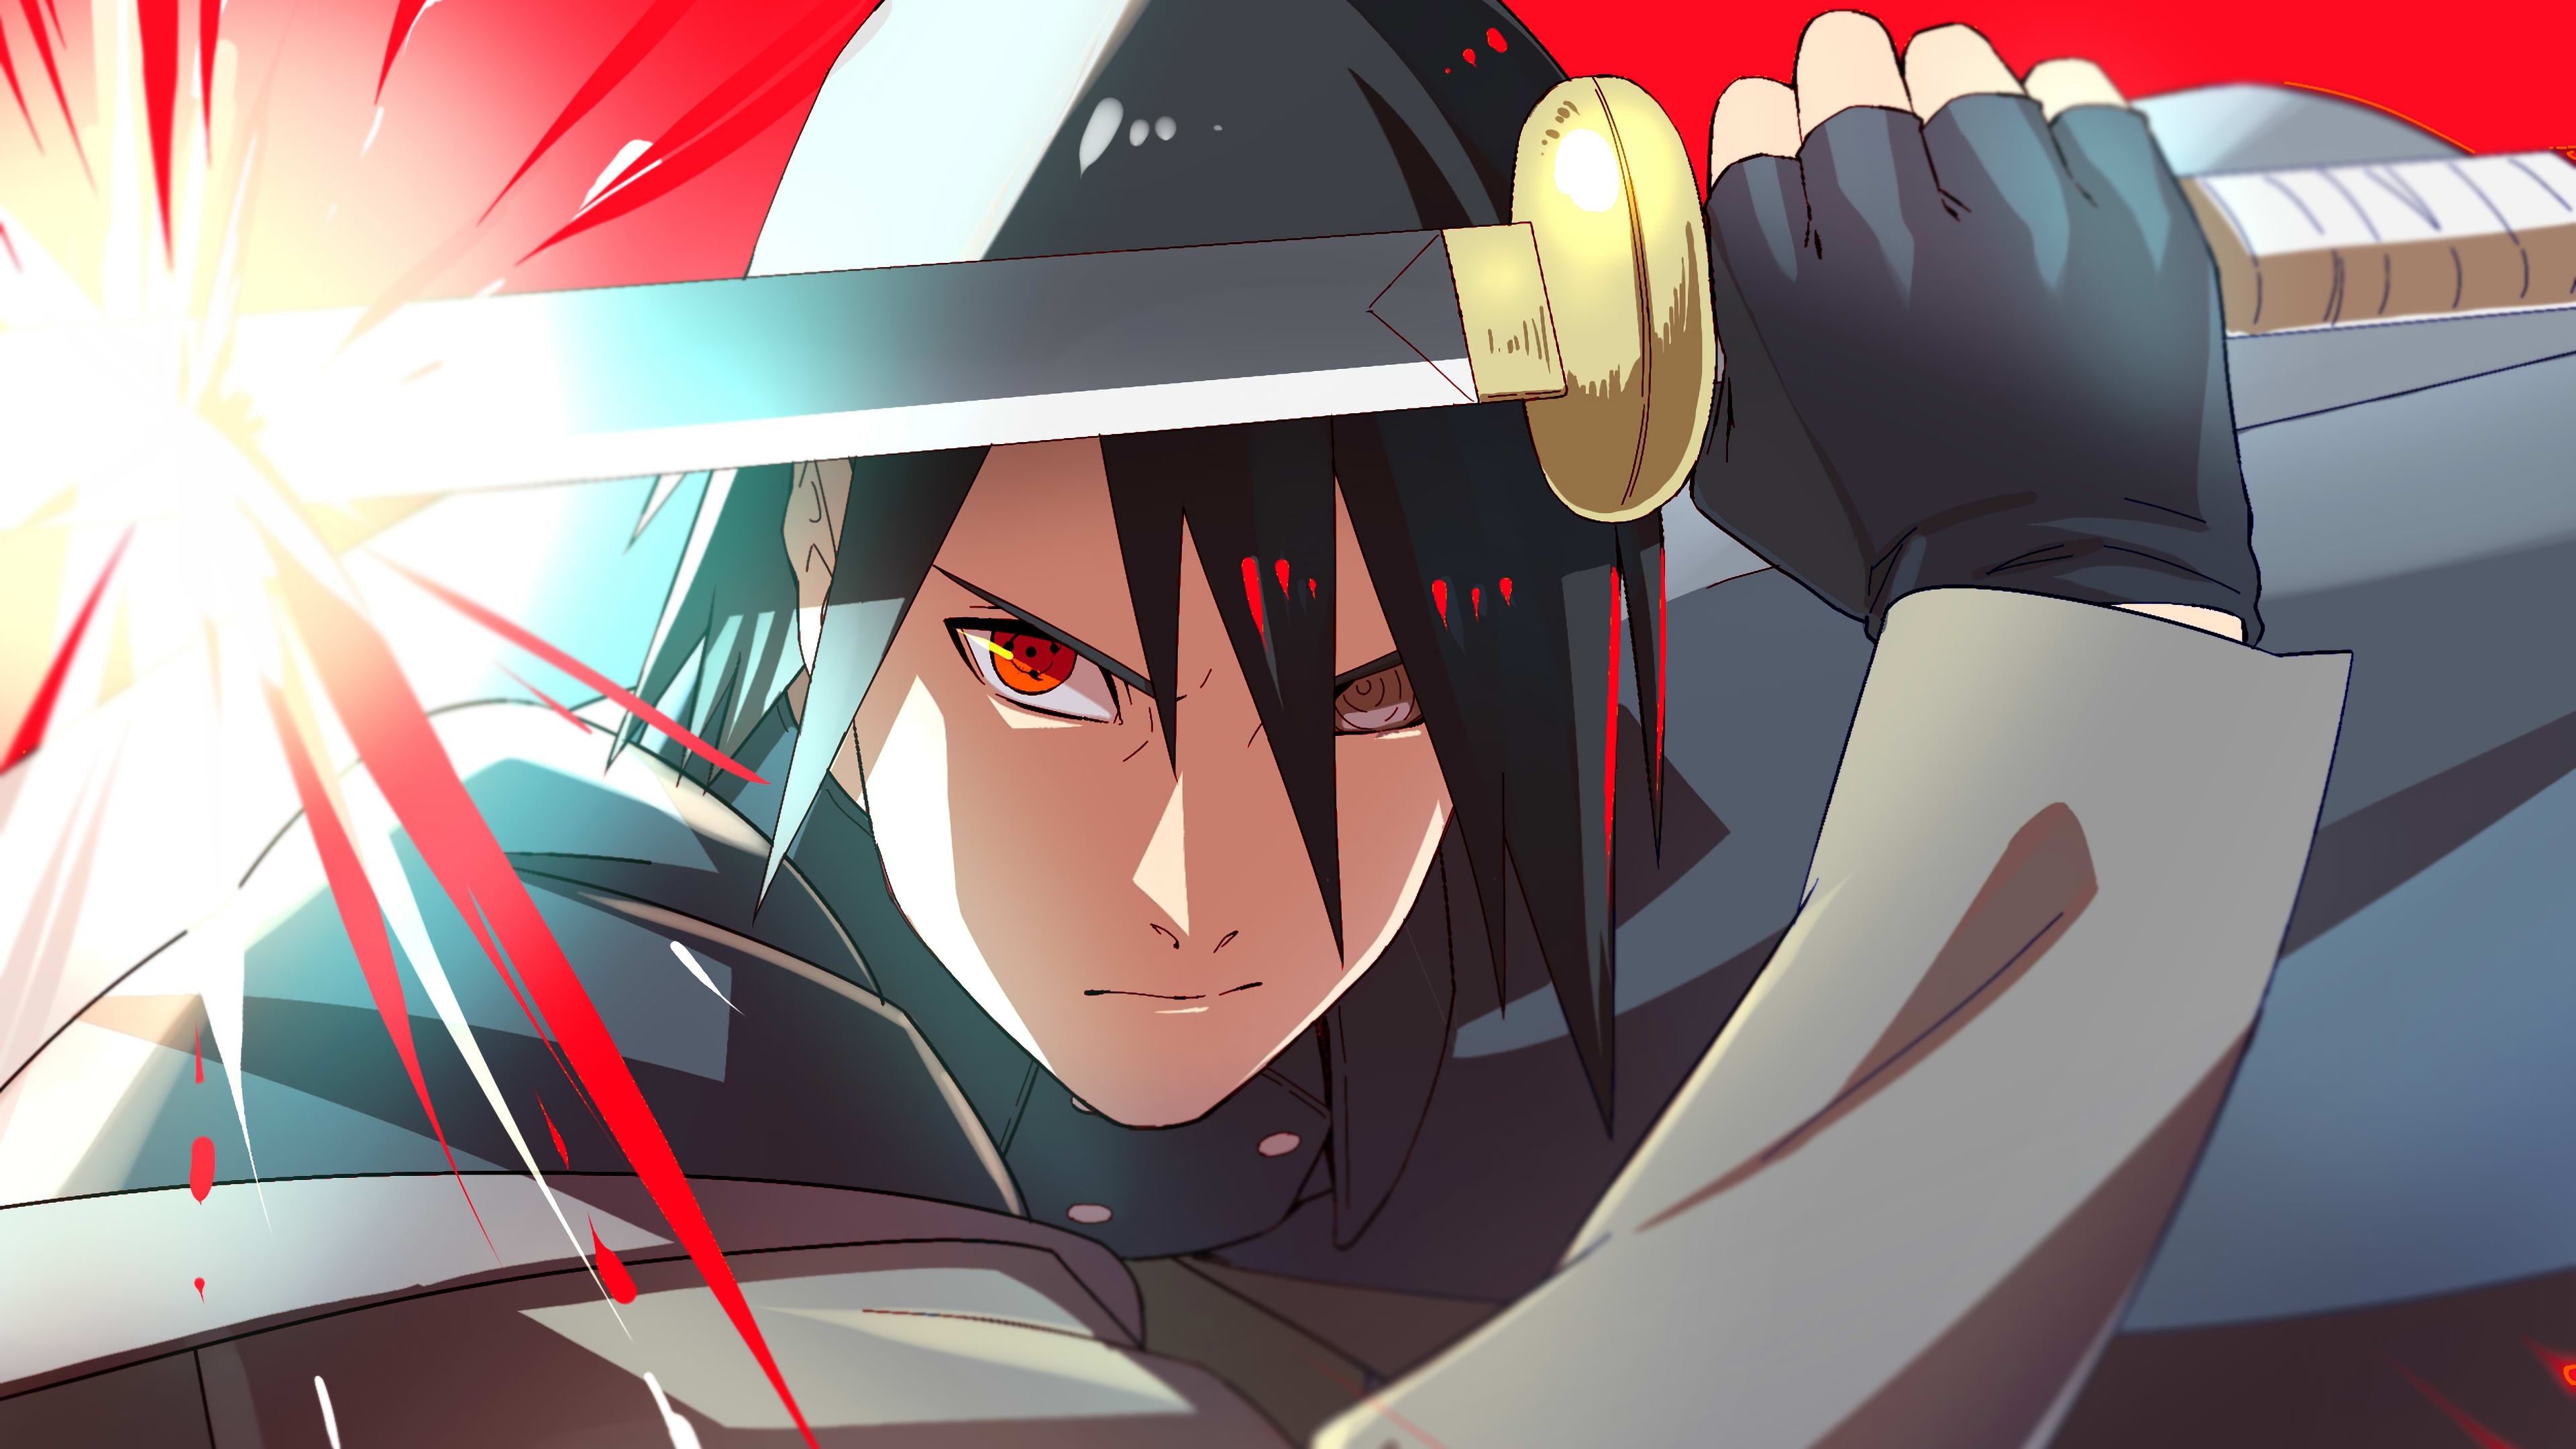 437139 descargar imagen animado, naruto, pelo negro, rinnegan (naruto), sasuke uchiha, sharingan (naruto), espada: fondos de pantalla y protectores de pantalla gratis